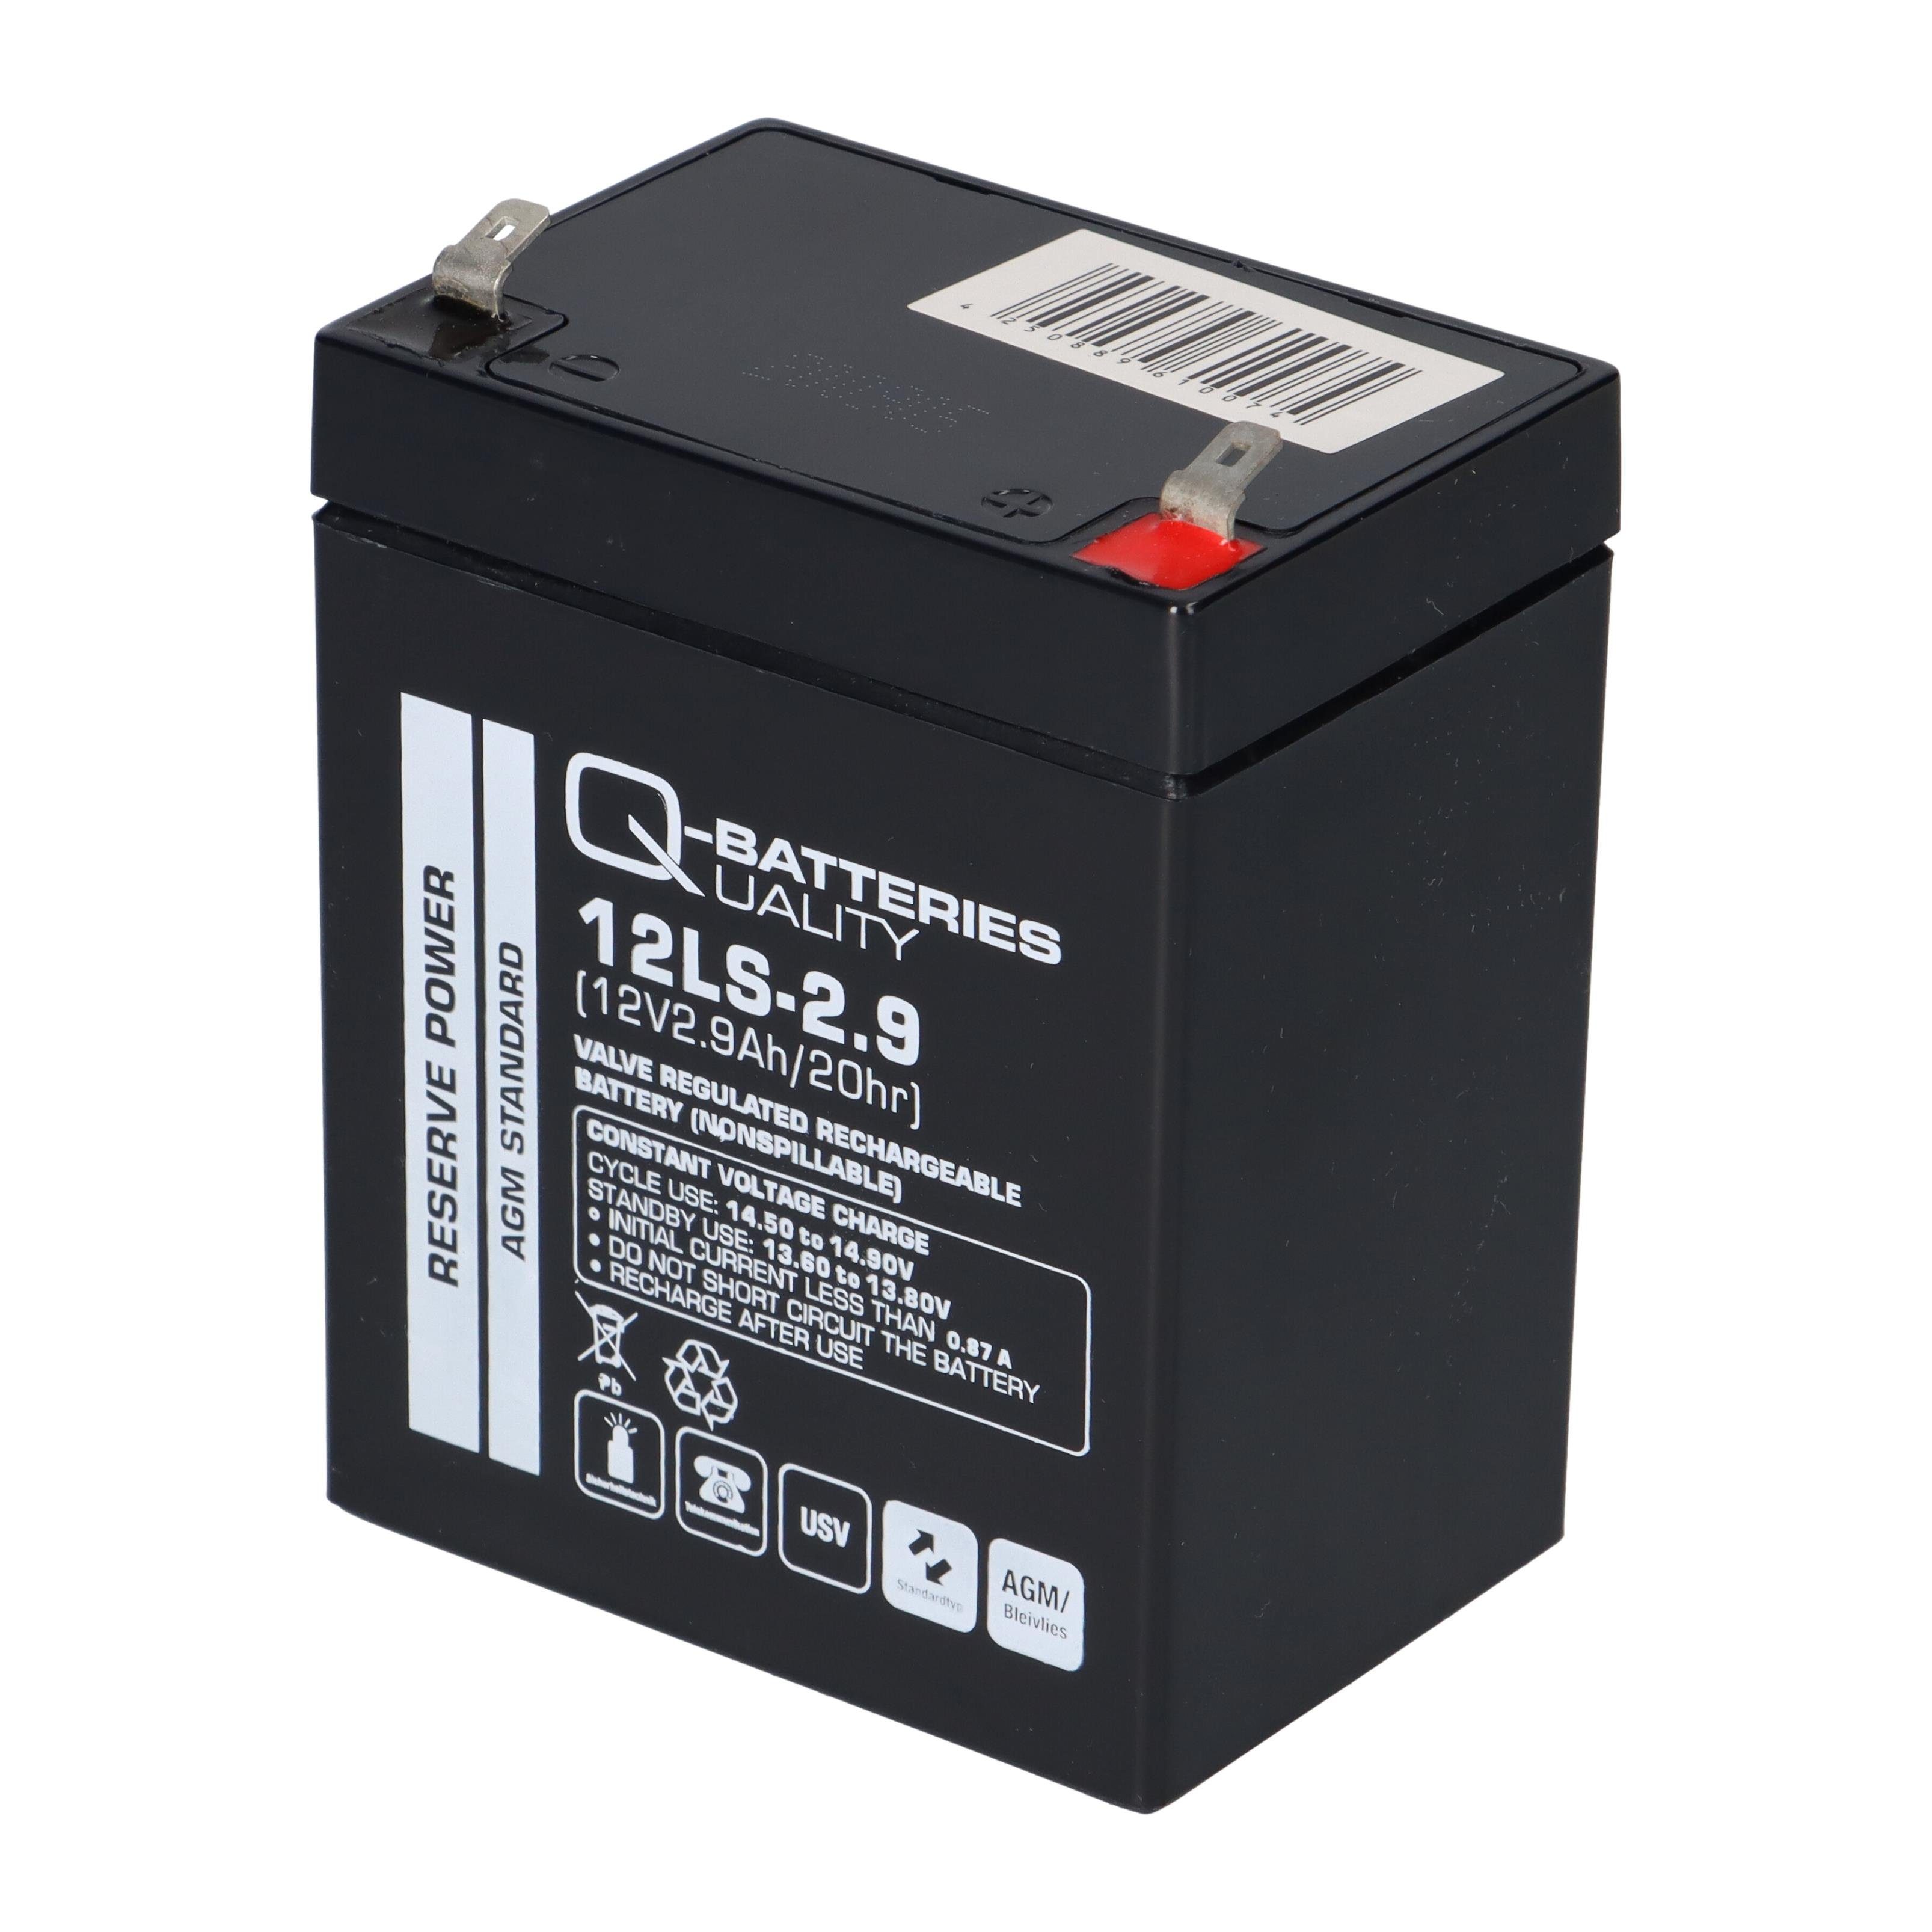 Q-Batteries Q-Batteries 12LS-2.9 12V 2,9Ah VRLA Akku Blei-Vlies / AGM Bleiakkus